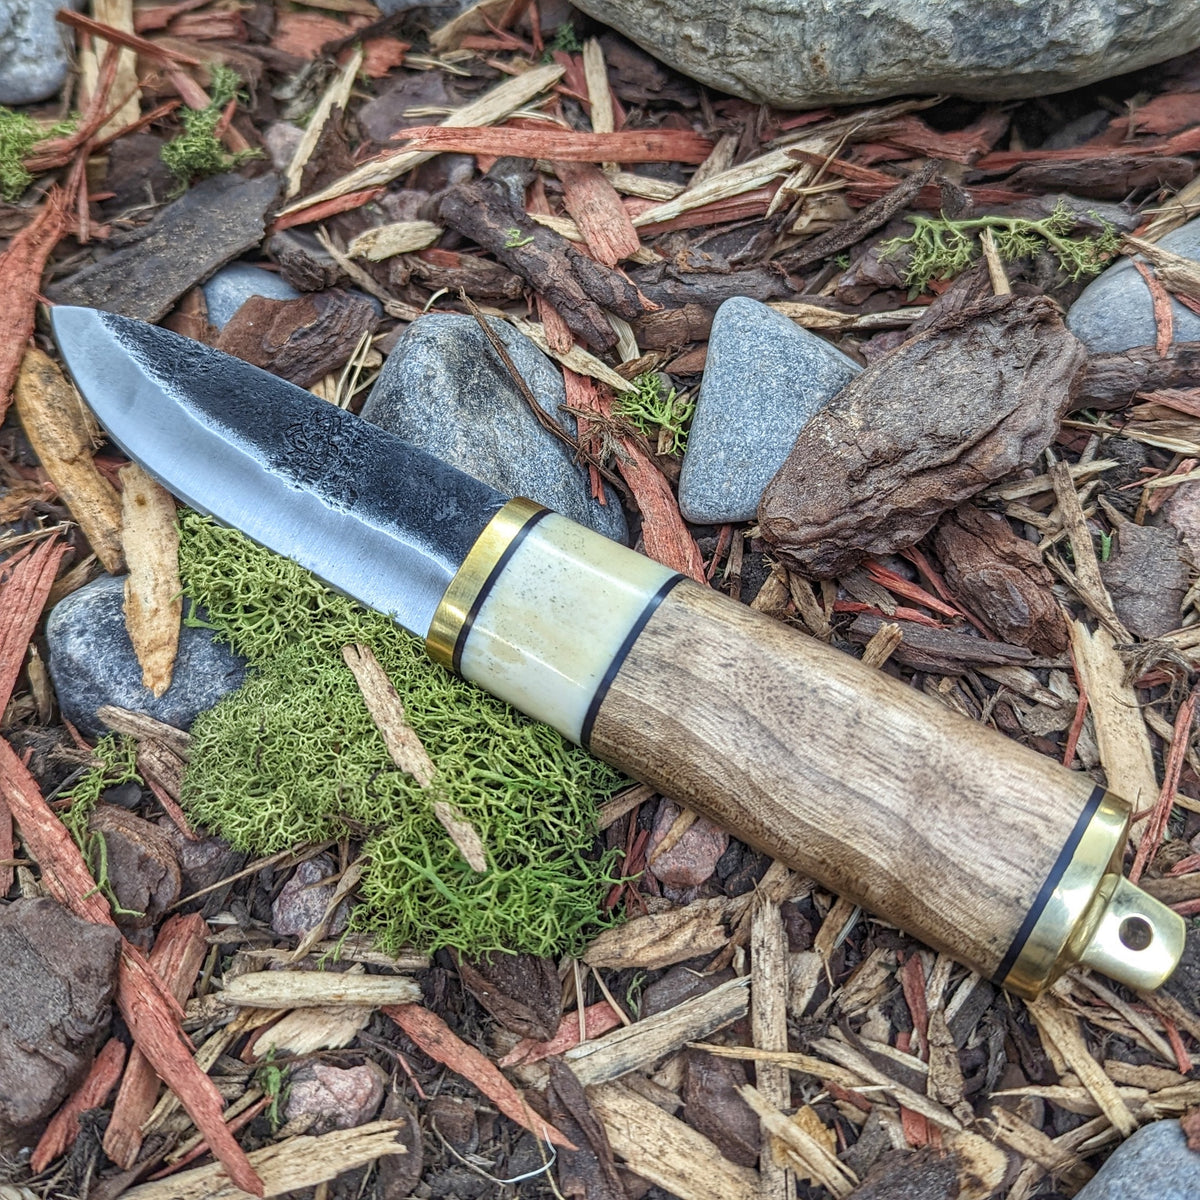 Jarl's Knife (Gotland)